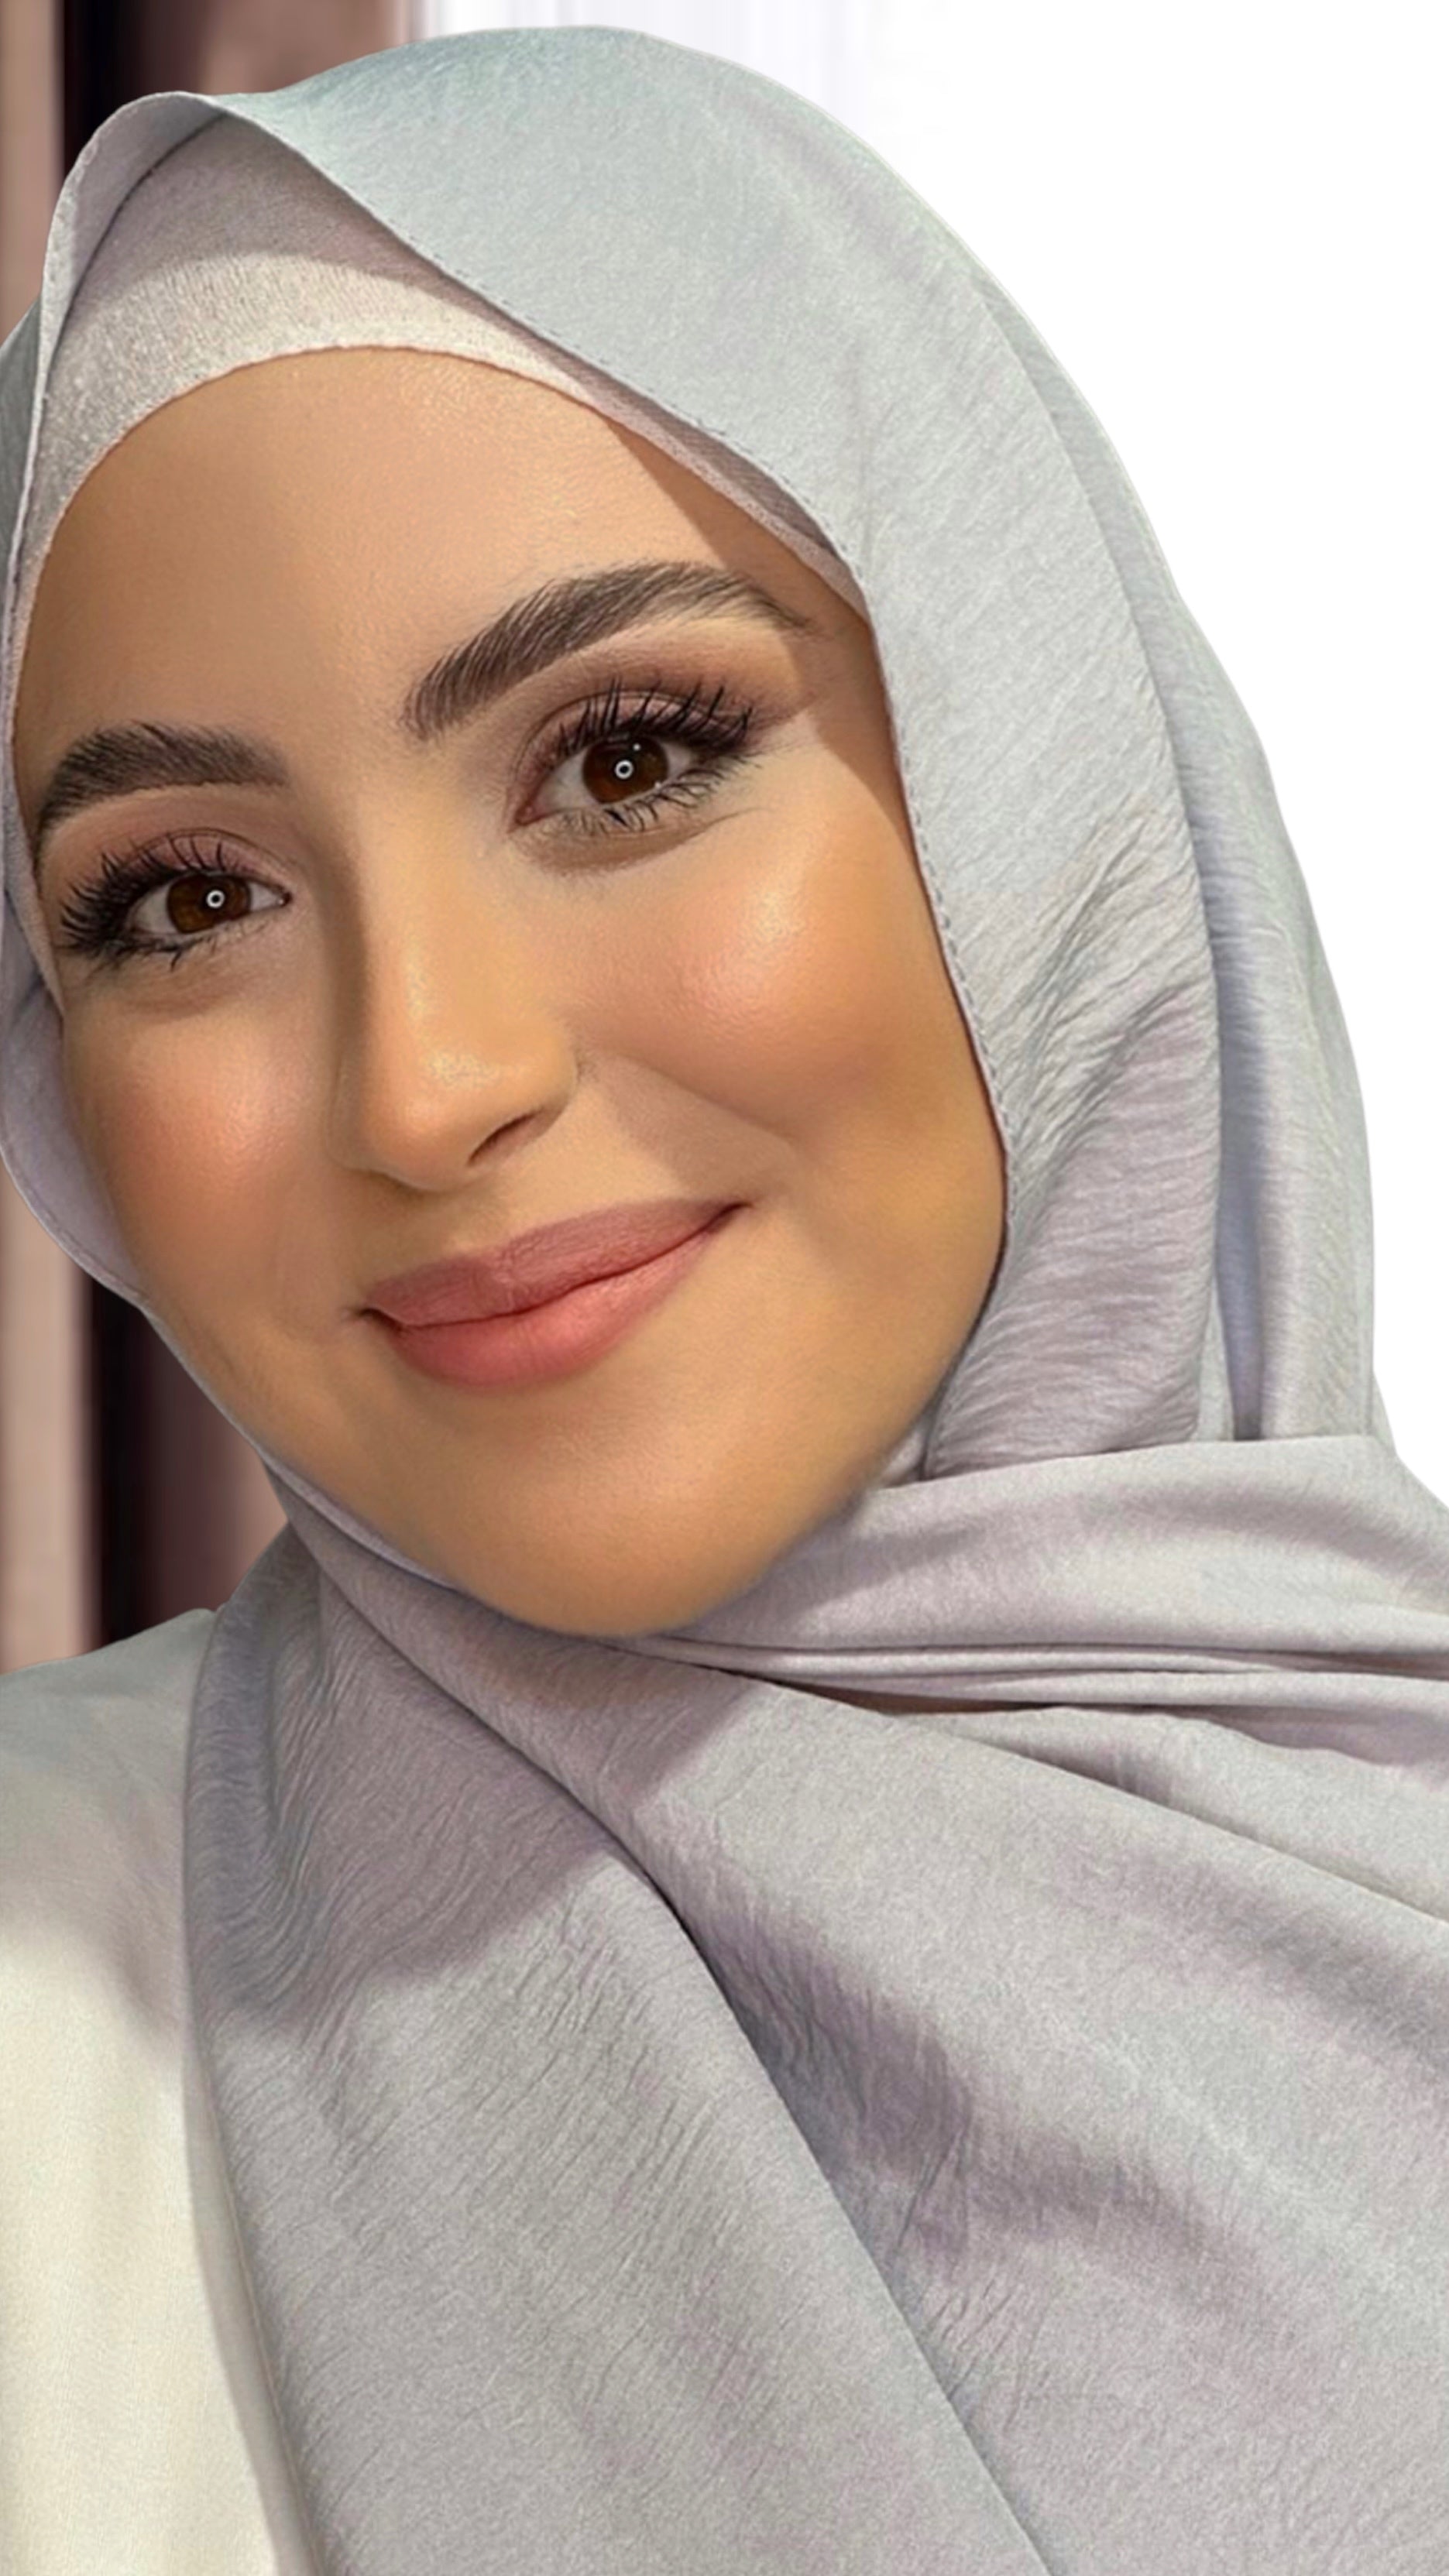 Hijab, chador, velo, turbante, foulard, copricapo, musulmano, islamico, sciarpa,Starter Hijab